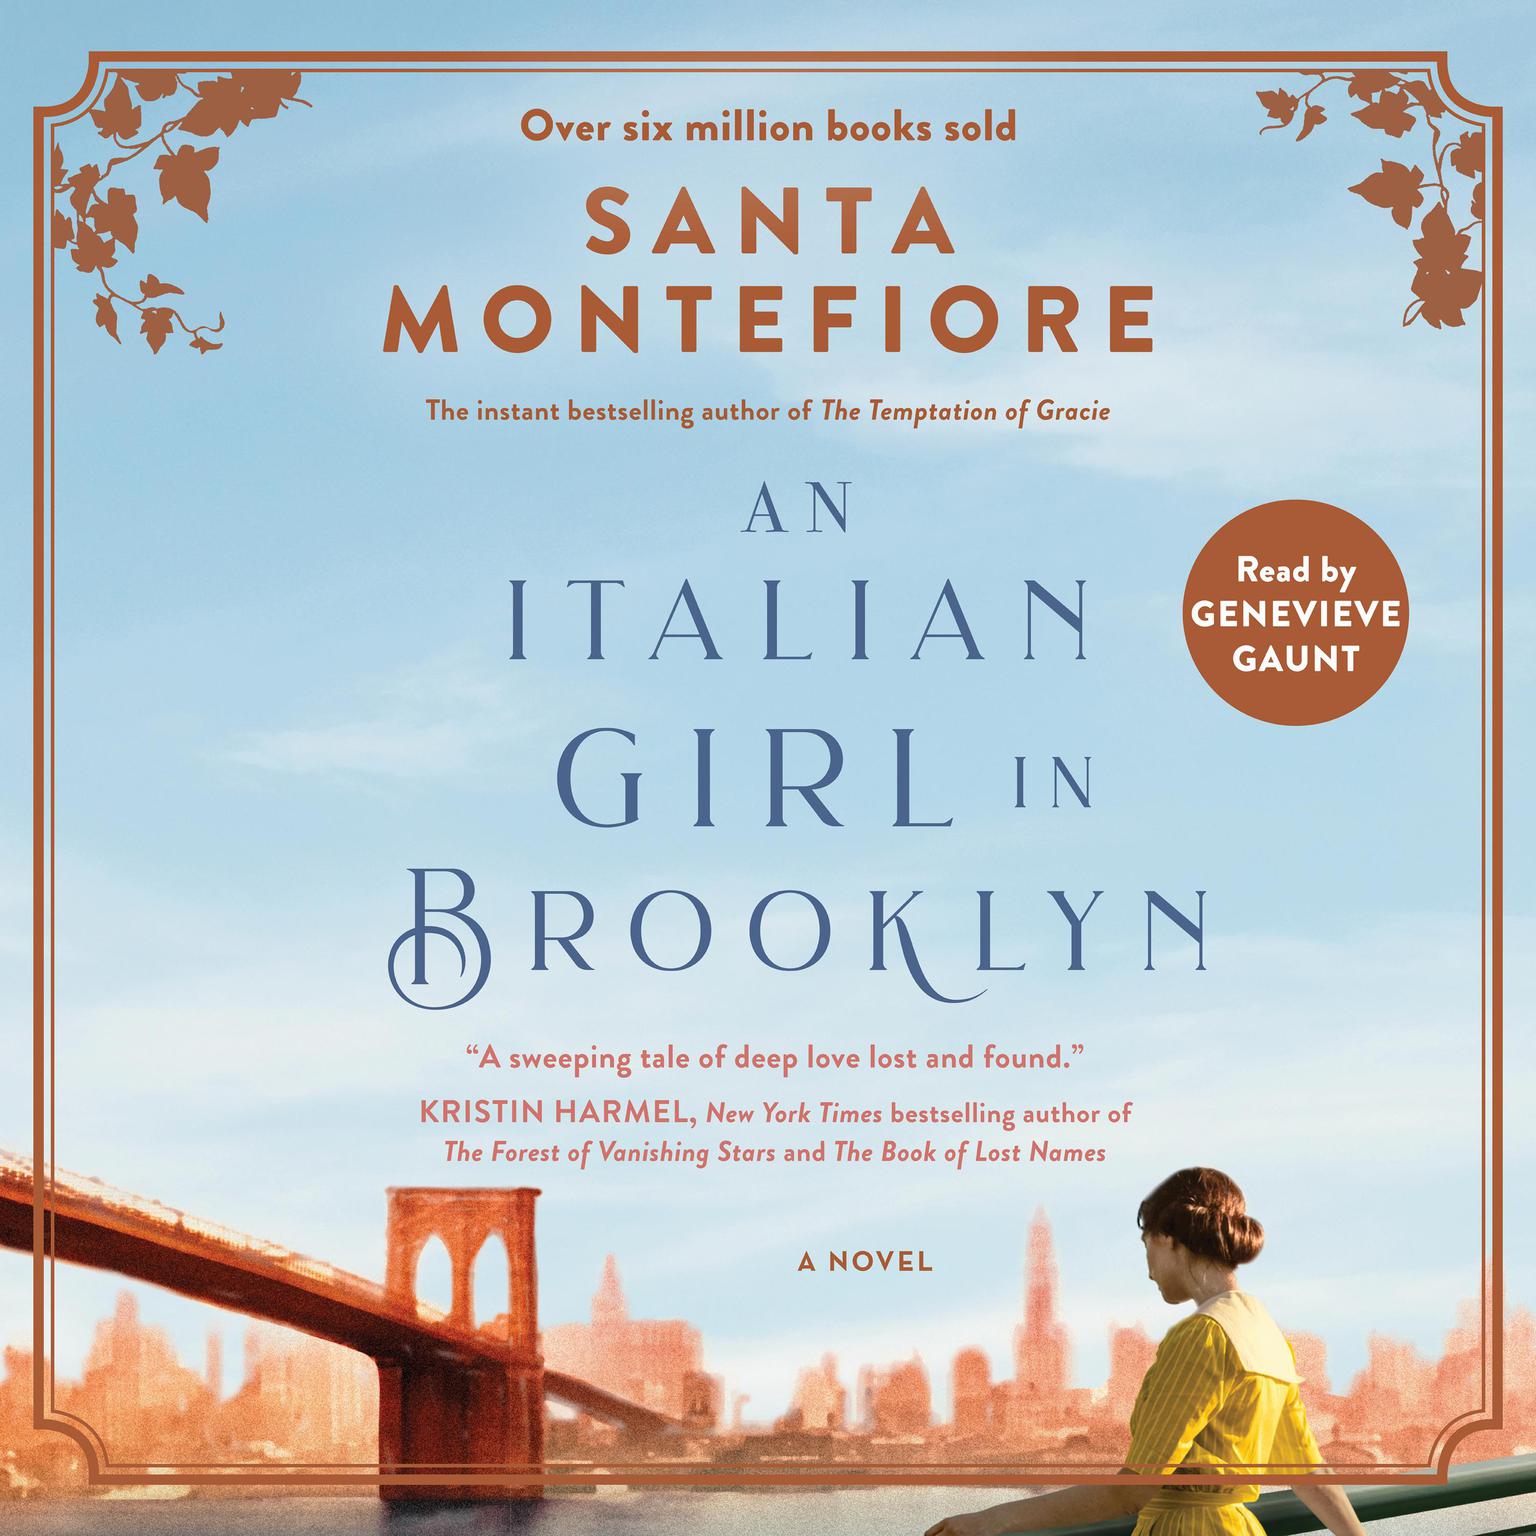 An Italian Girl in Brooklyn: A spellbinding story of buried secrets and new beginnings Audiobook, by Santa Montefiore